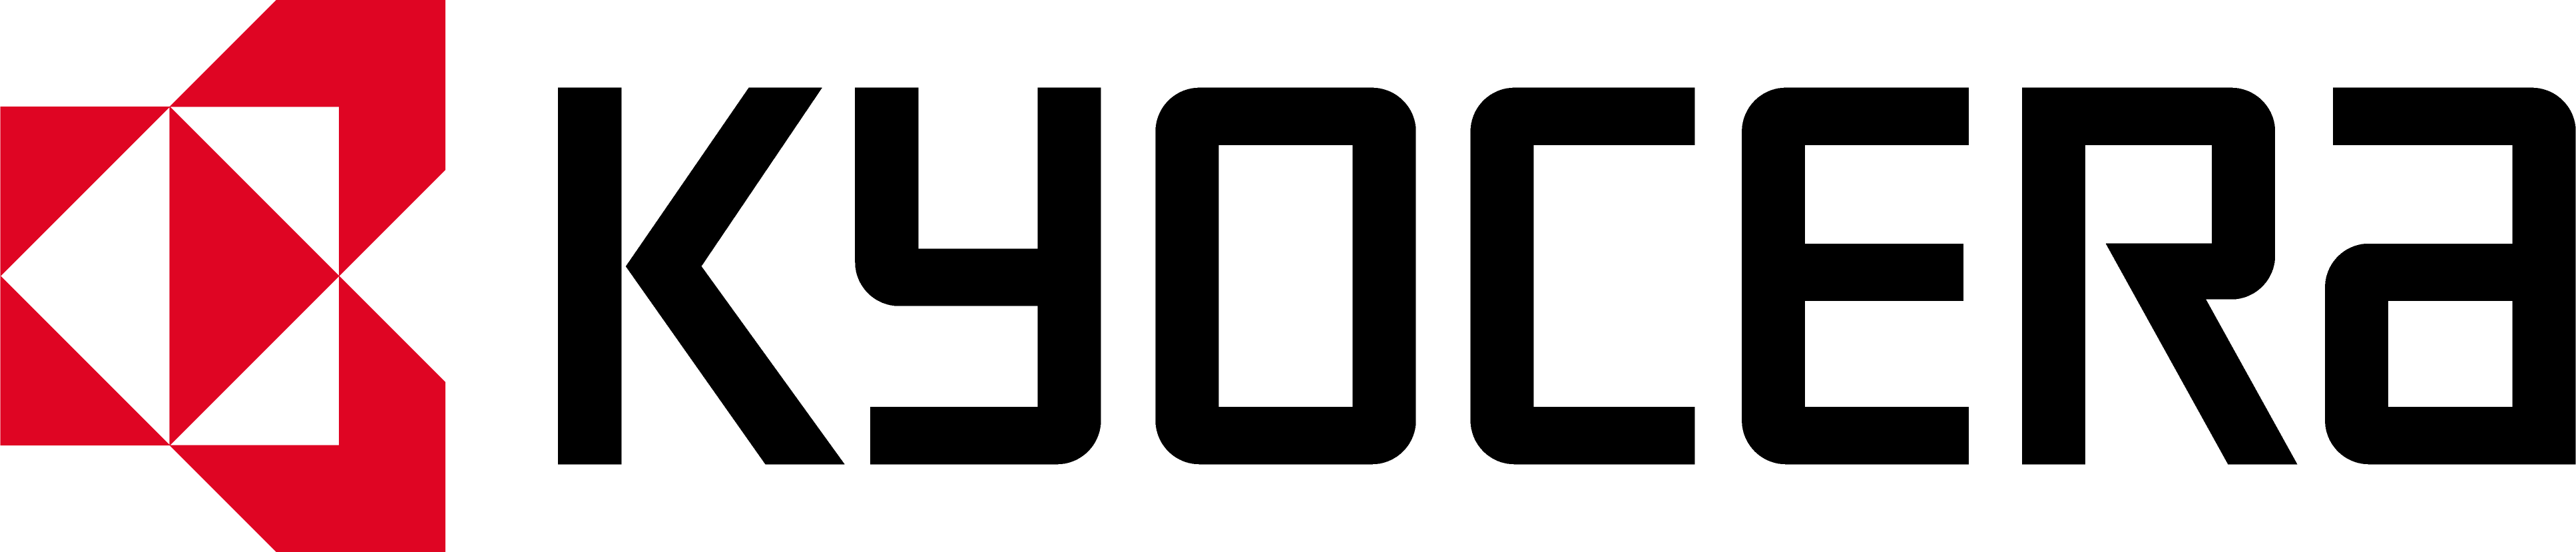 Kyocera Logo Png1